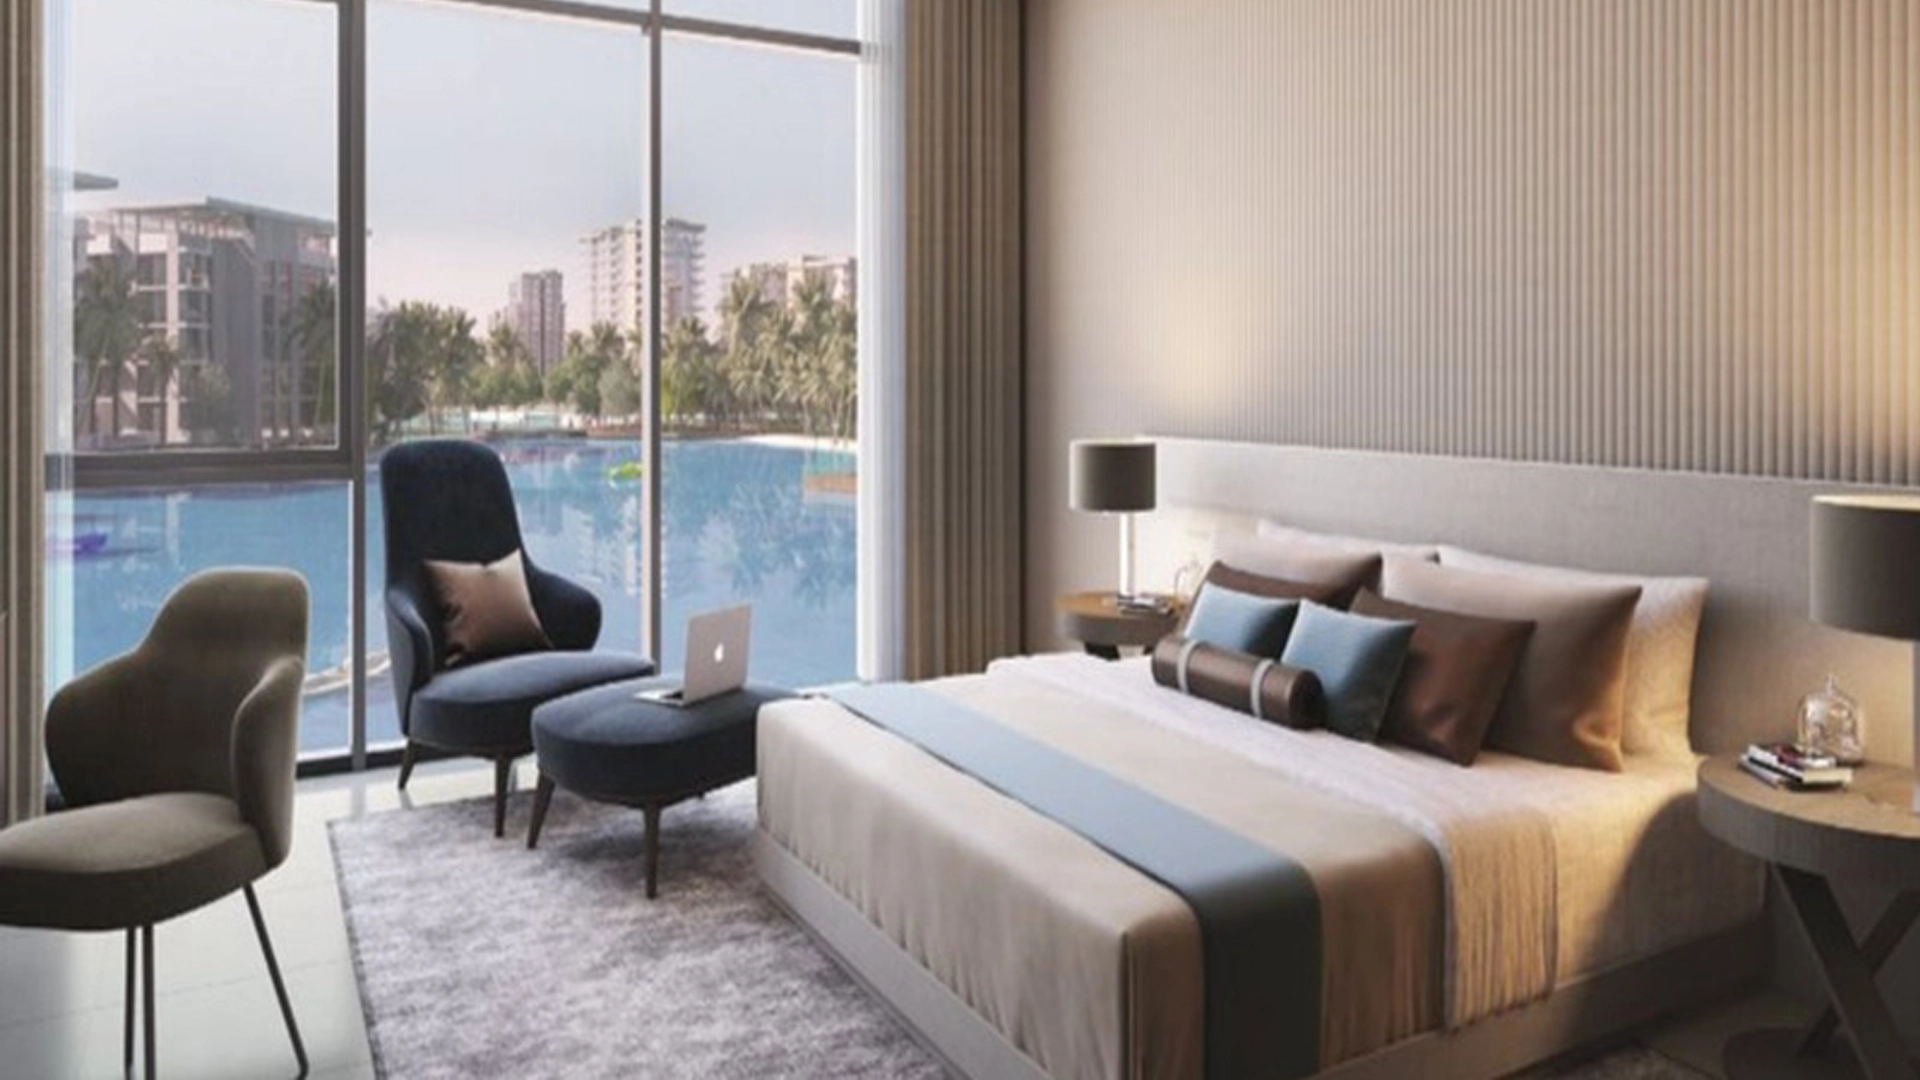 Edge-Realty-شقة فاخرة للبيع في دبي بديستريكت 1 في مدينة محمد بن راشد